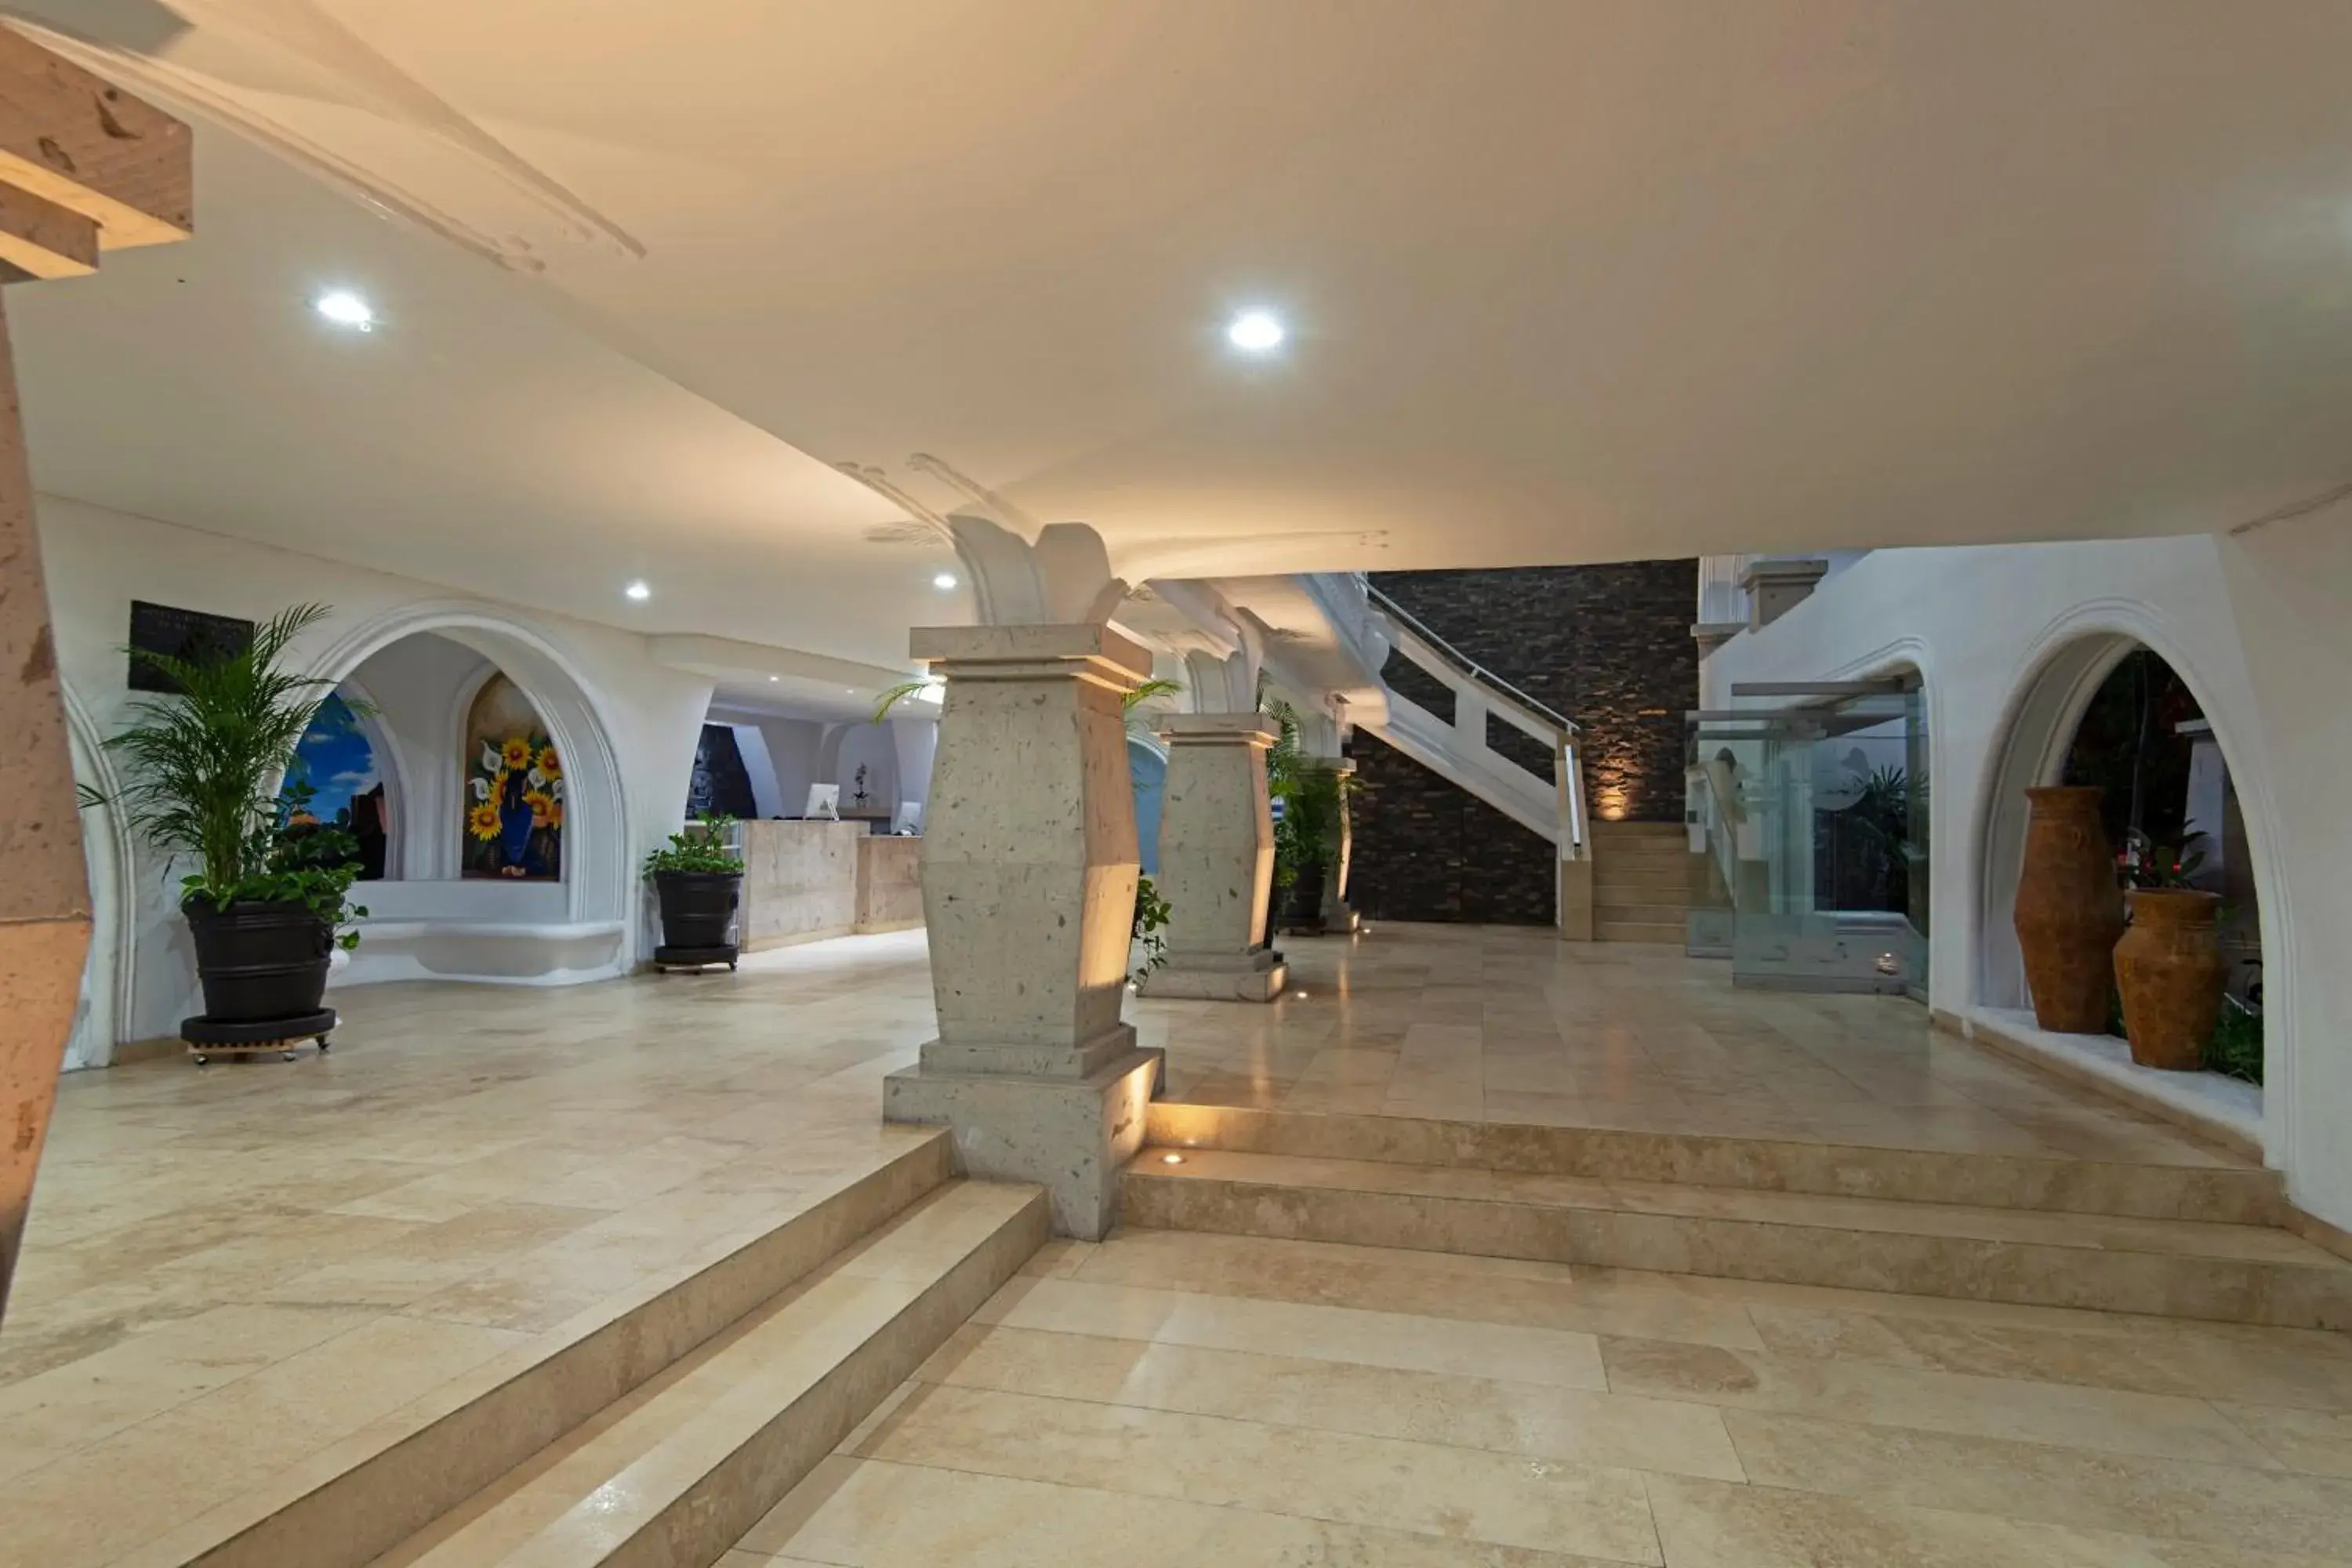 Lobby or reception in Hotel Fiesta Mexicana